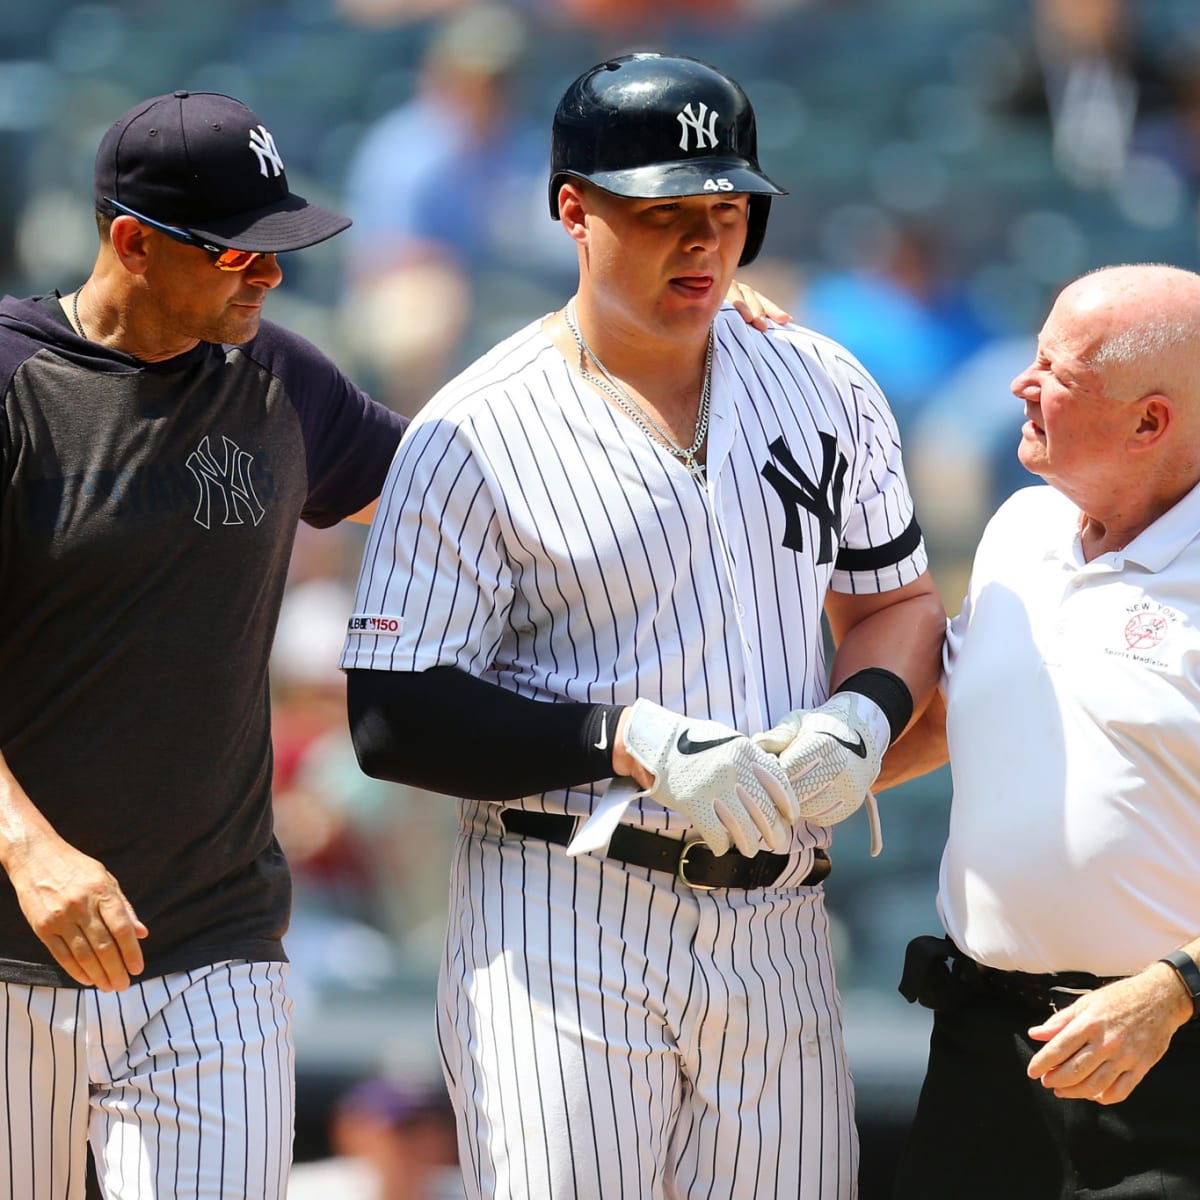 Yankees: Luke Voit looks gimpy rounding bases after monster home run